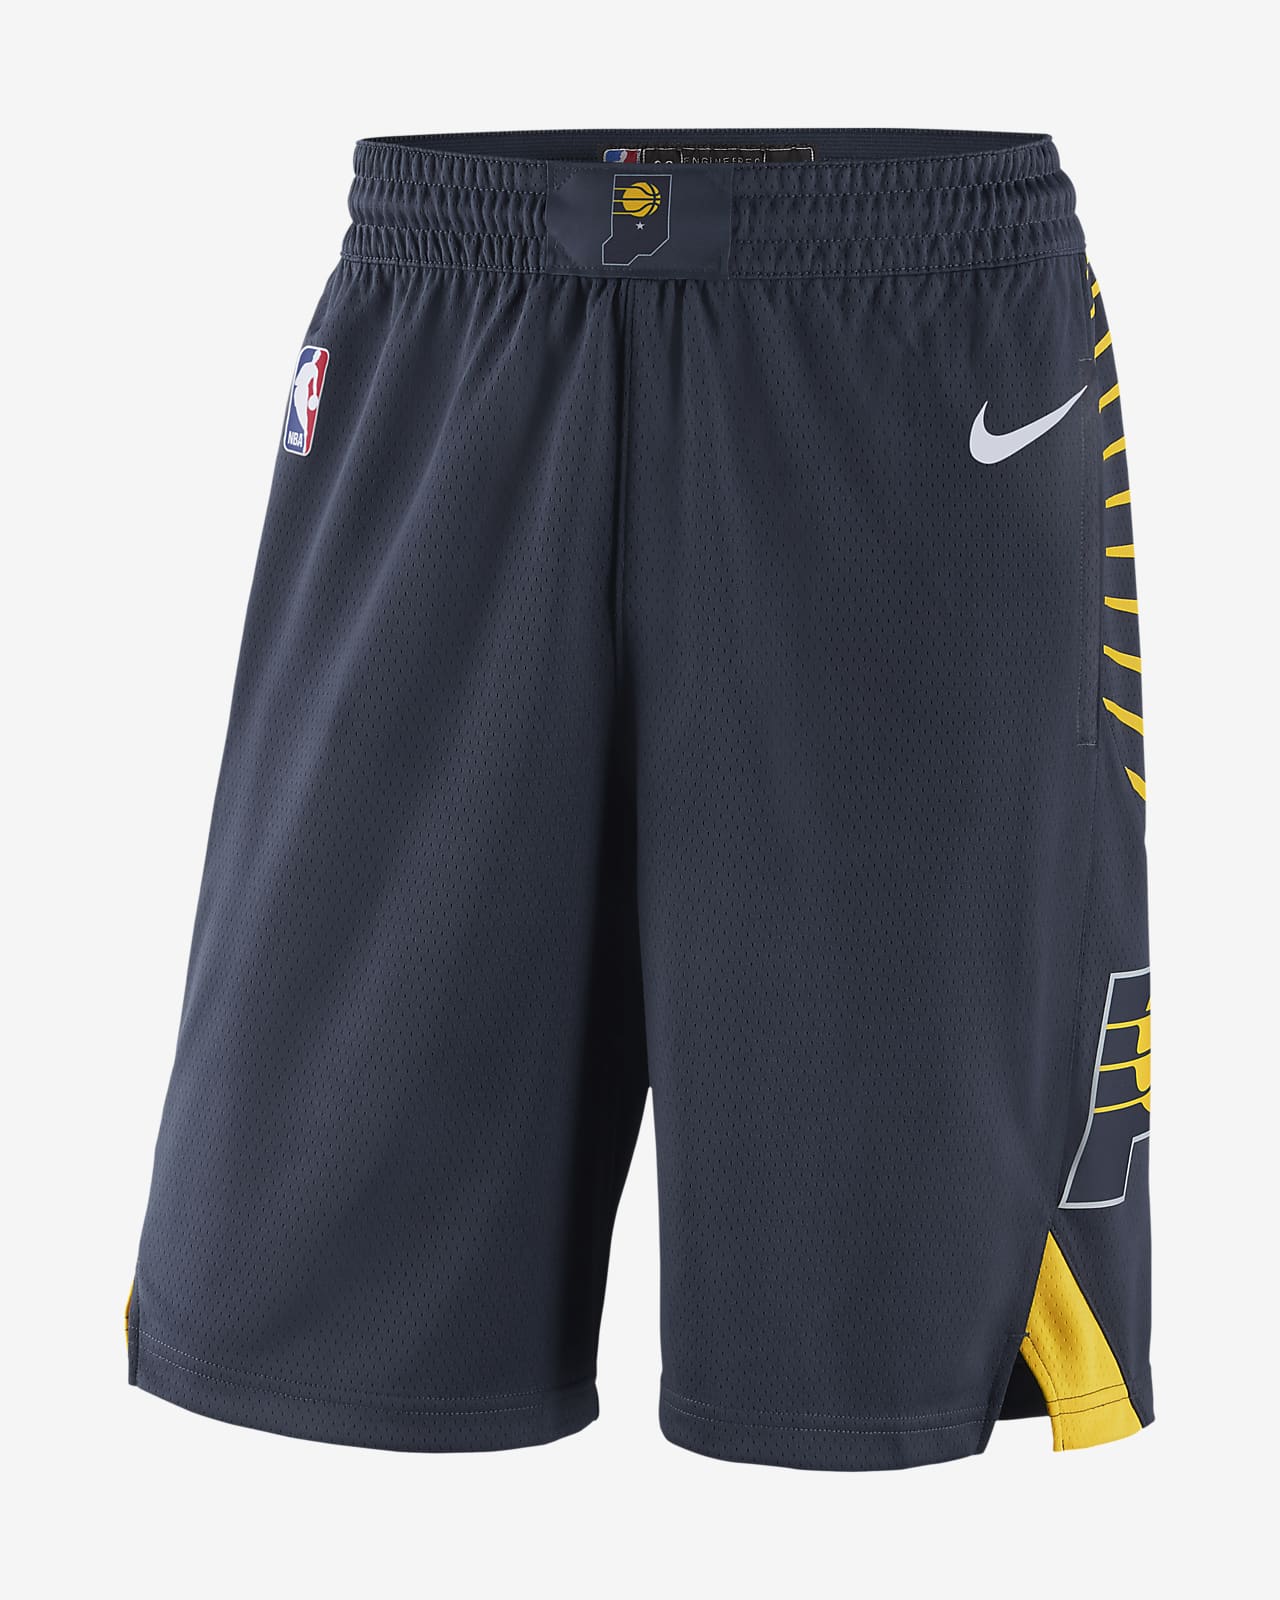 Indiana Pacers Icon Edition Men's Nike NBA Swingman Shorts